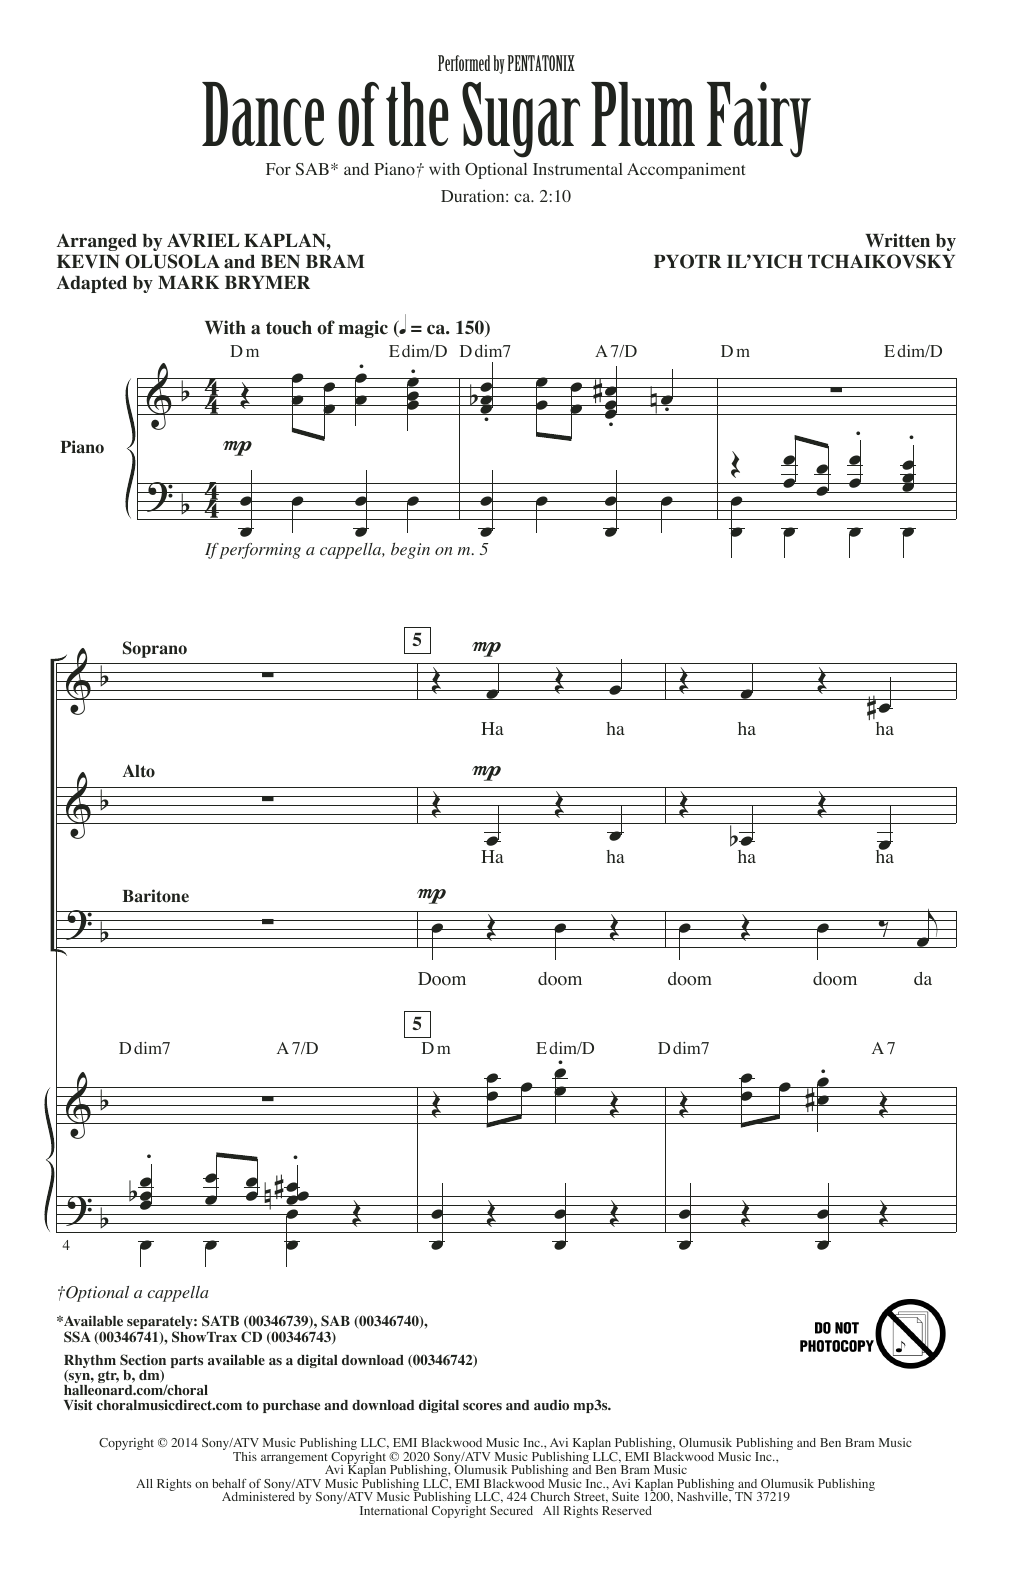 Pentatonix Dance Of The Sugar Plum Fairy (arr. Mark Brymer) Sheet Music Notes & Chords for SSA Choir - Download or Print PDF